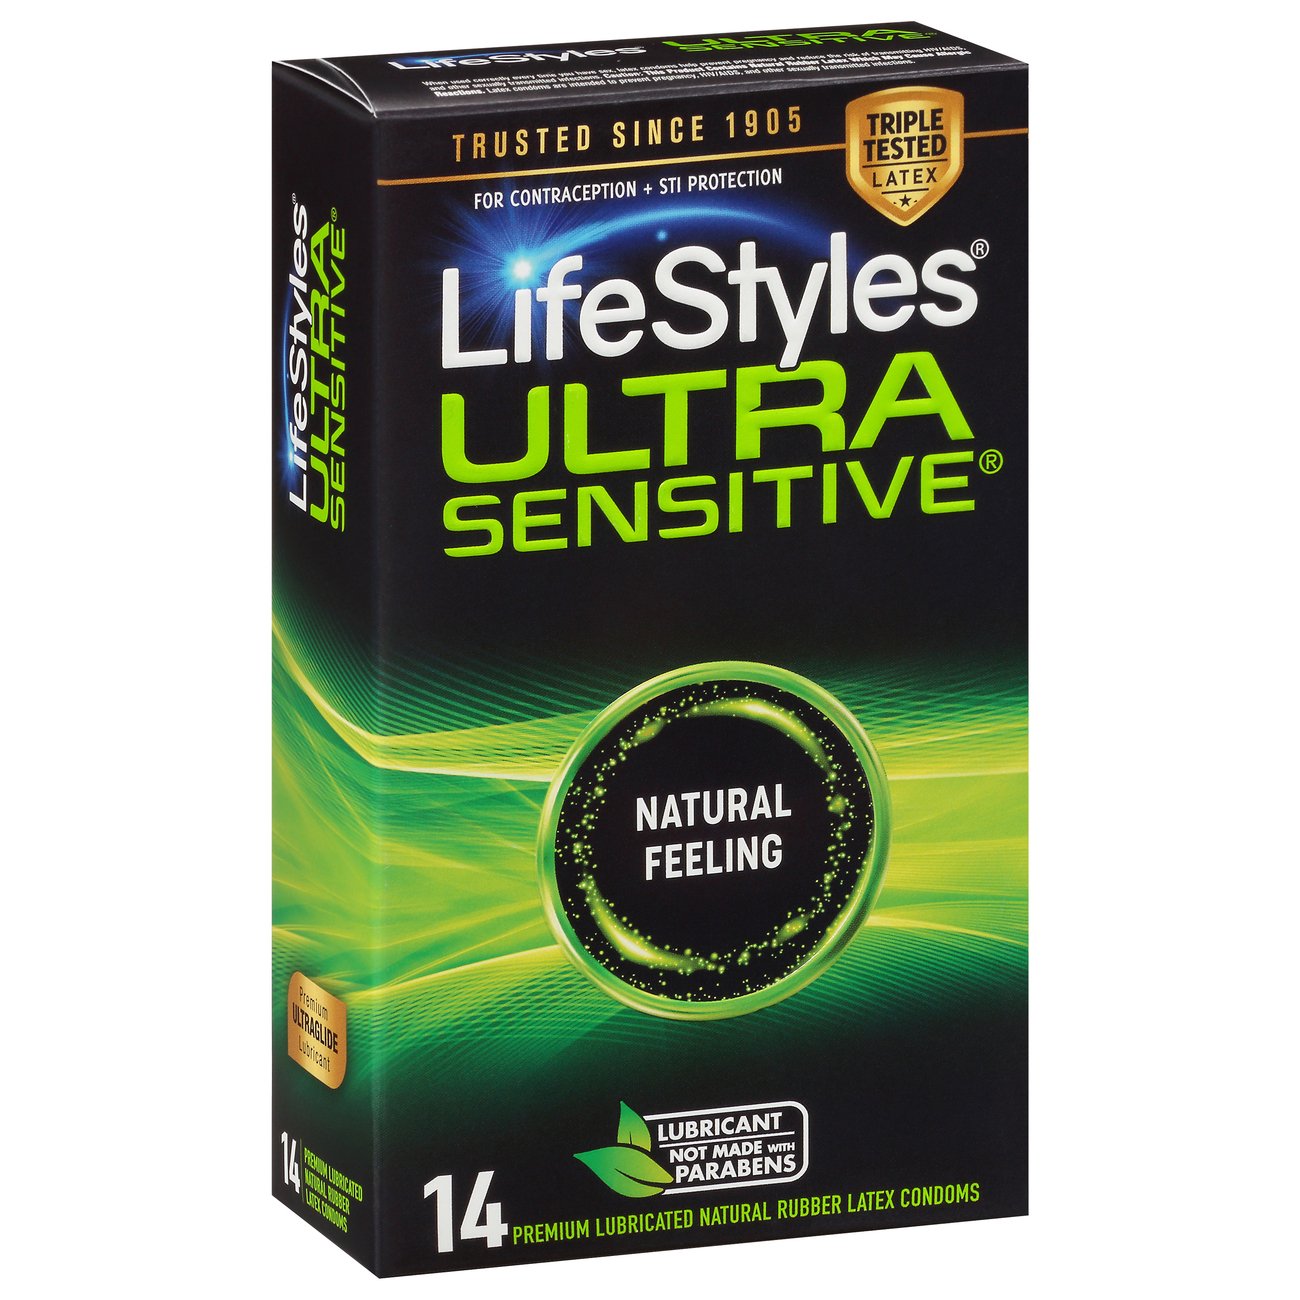 LifeStyles Ultra Sensitive Condoms - Shop Condoms ...